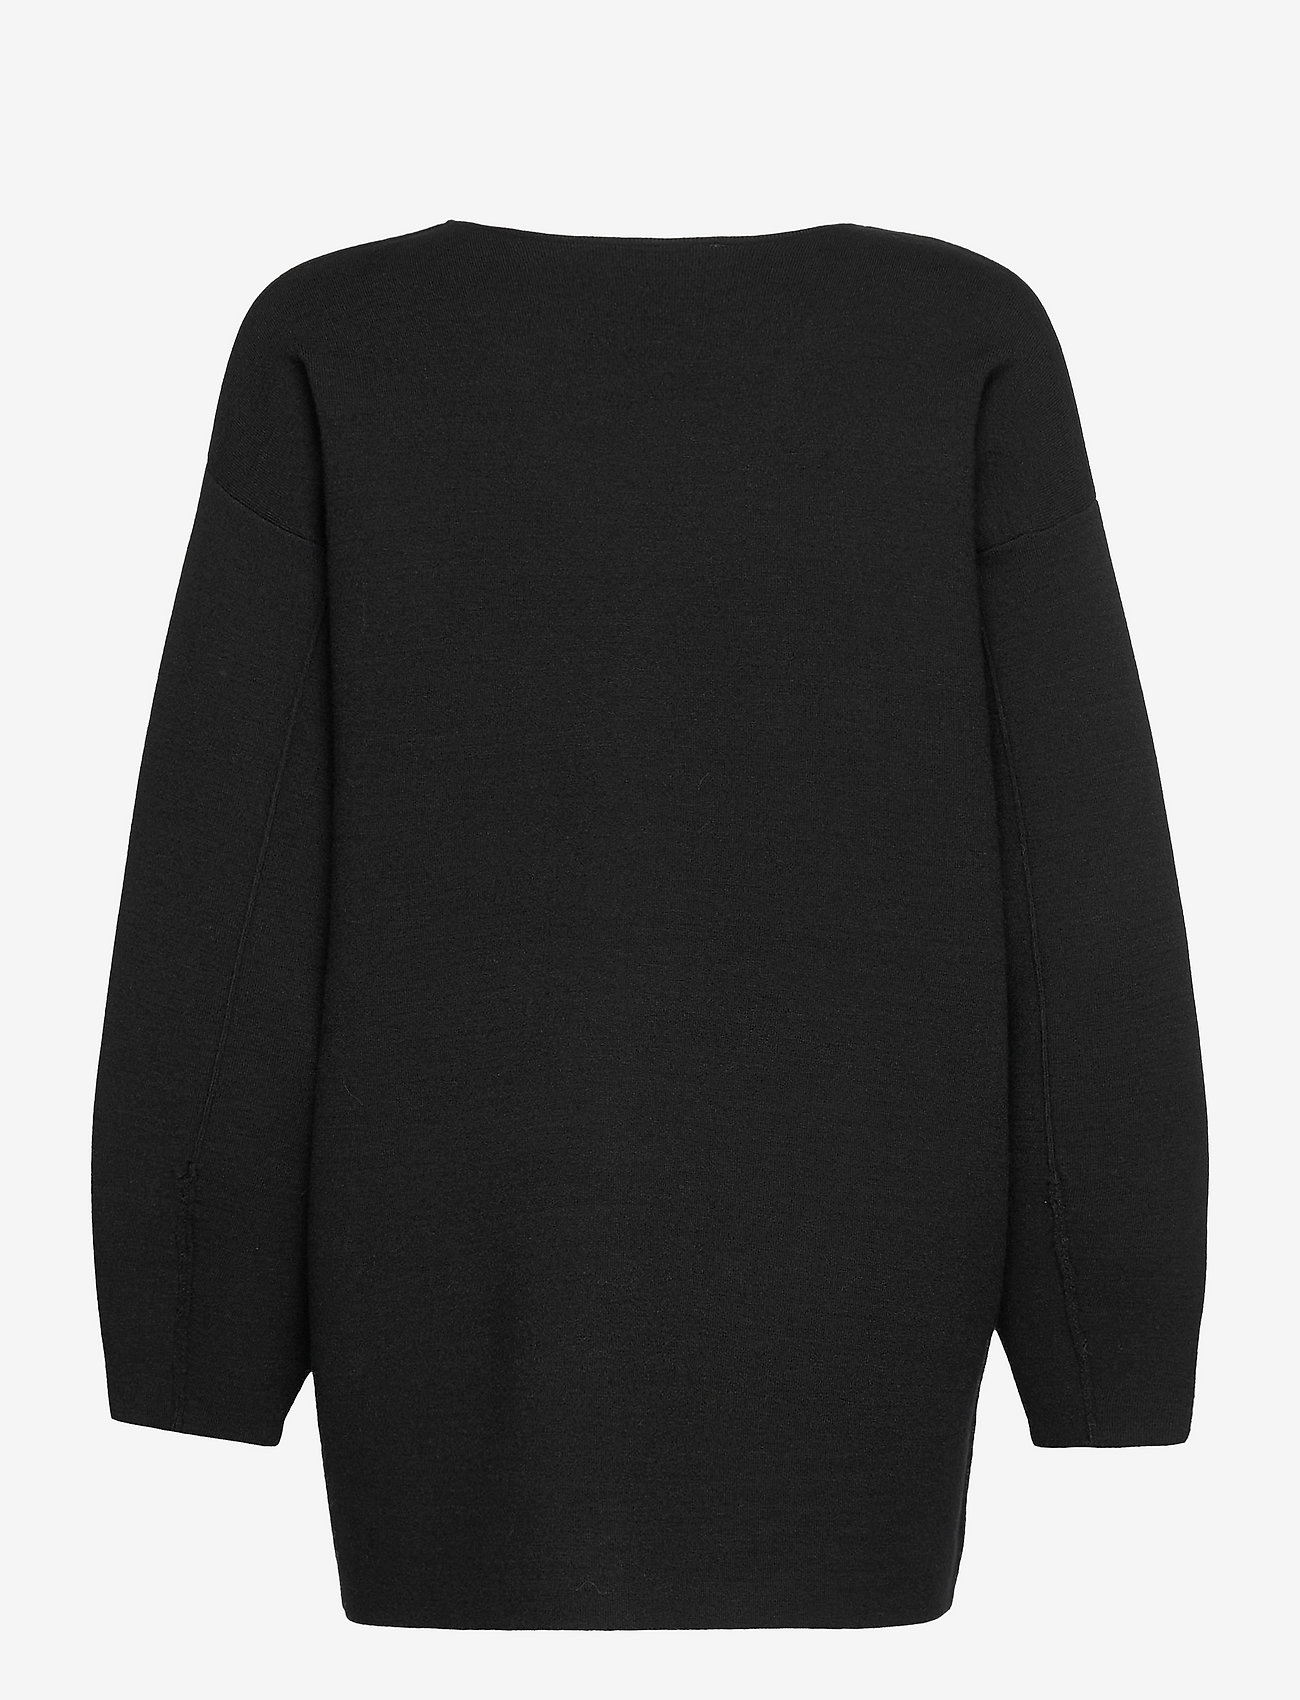 Gestuz - TalliGZ V-pullover - džemprid - black - 1